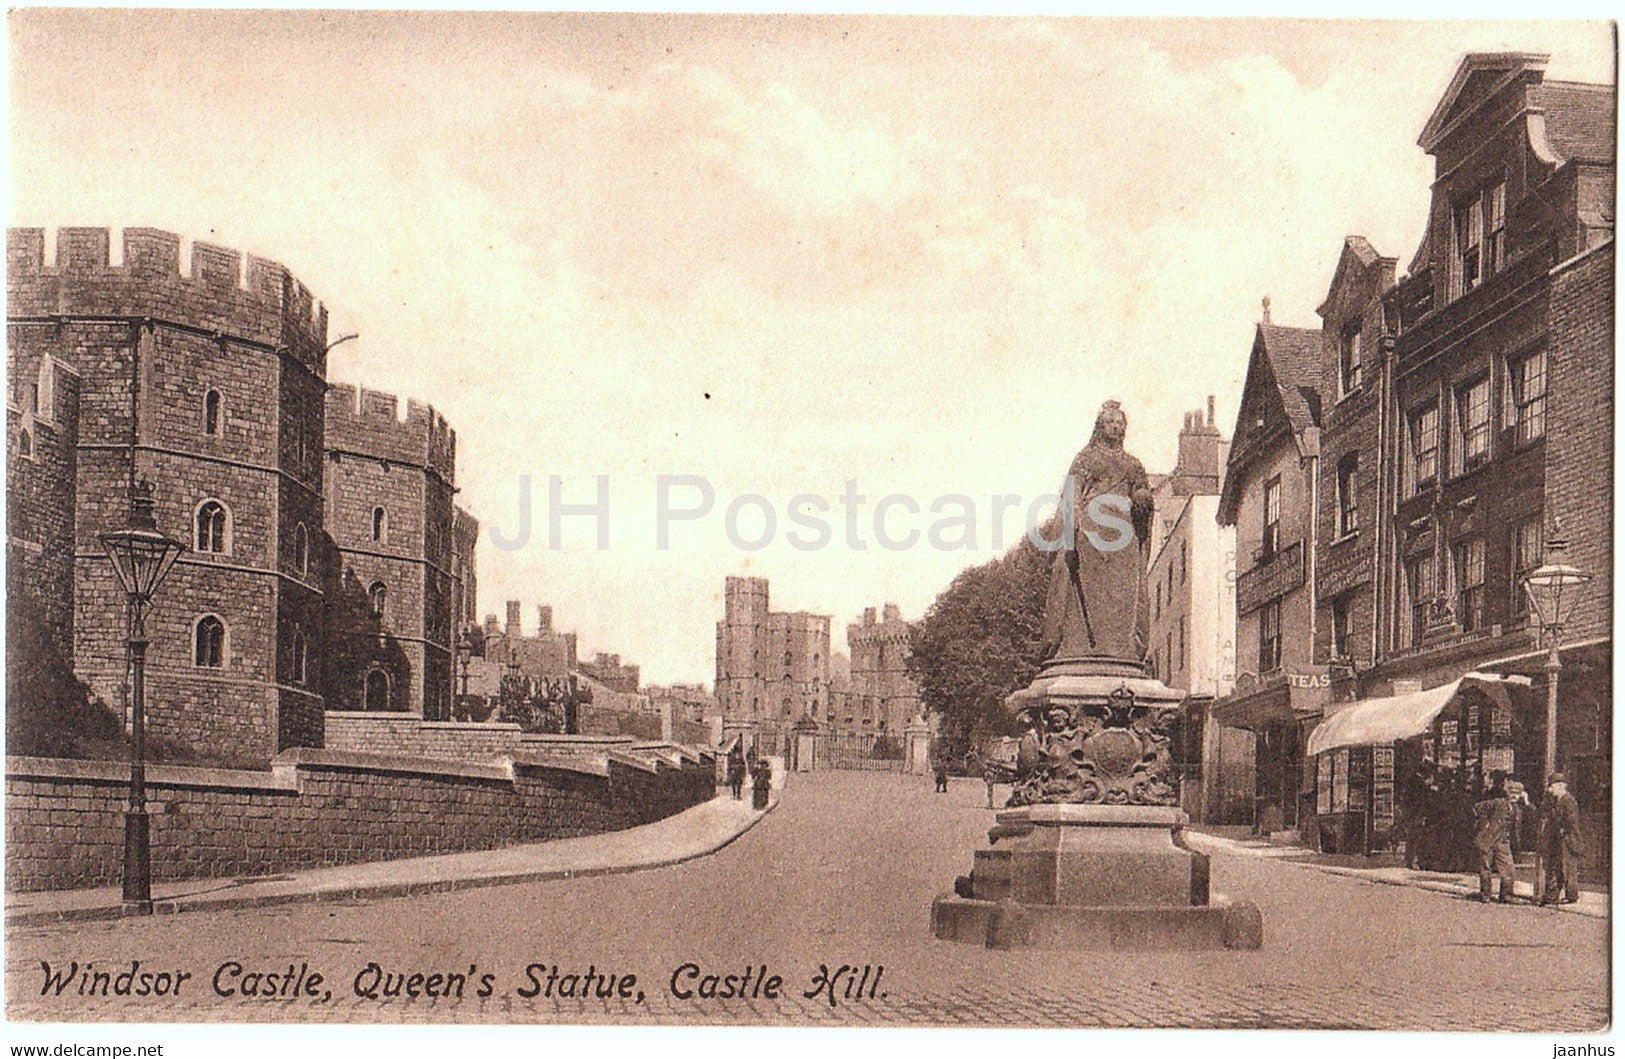 Windsor Castle - Queen's Statue - Castle Hill - monument - 35380 - old postcard - England - United Kingdom - unused - JH Postcards